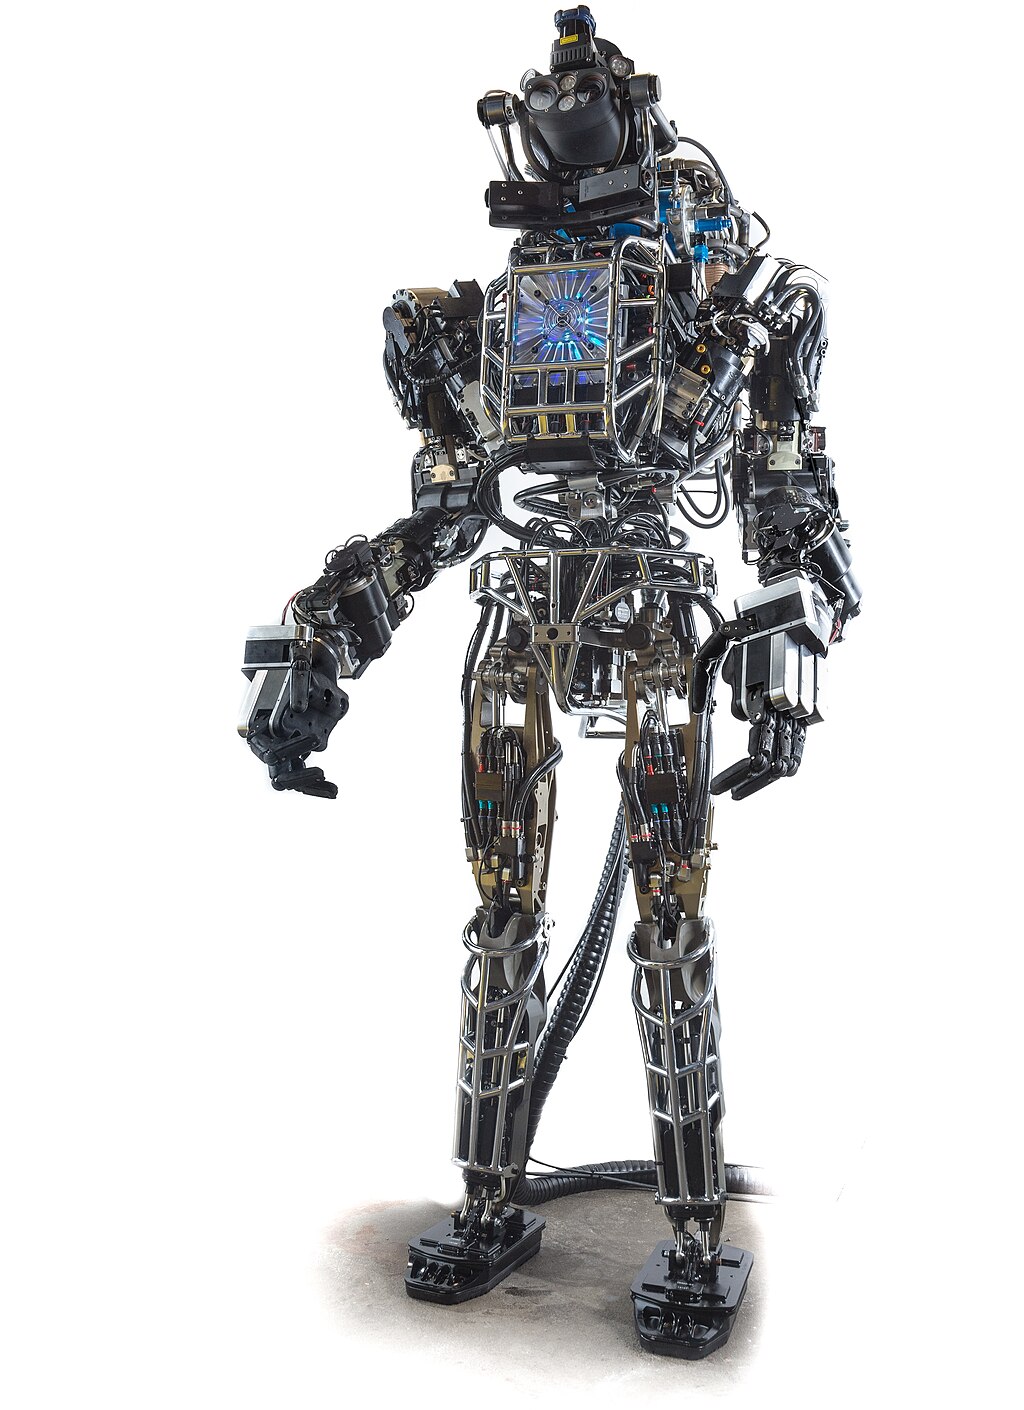 Atlas (2013), robot androïde de Boston Dynamics. Wikipedia.